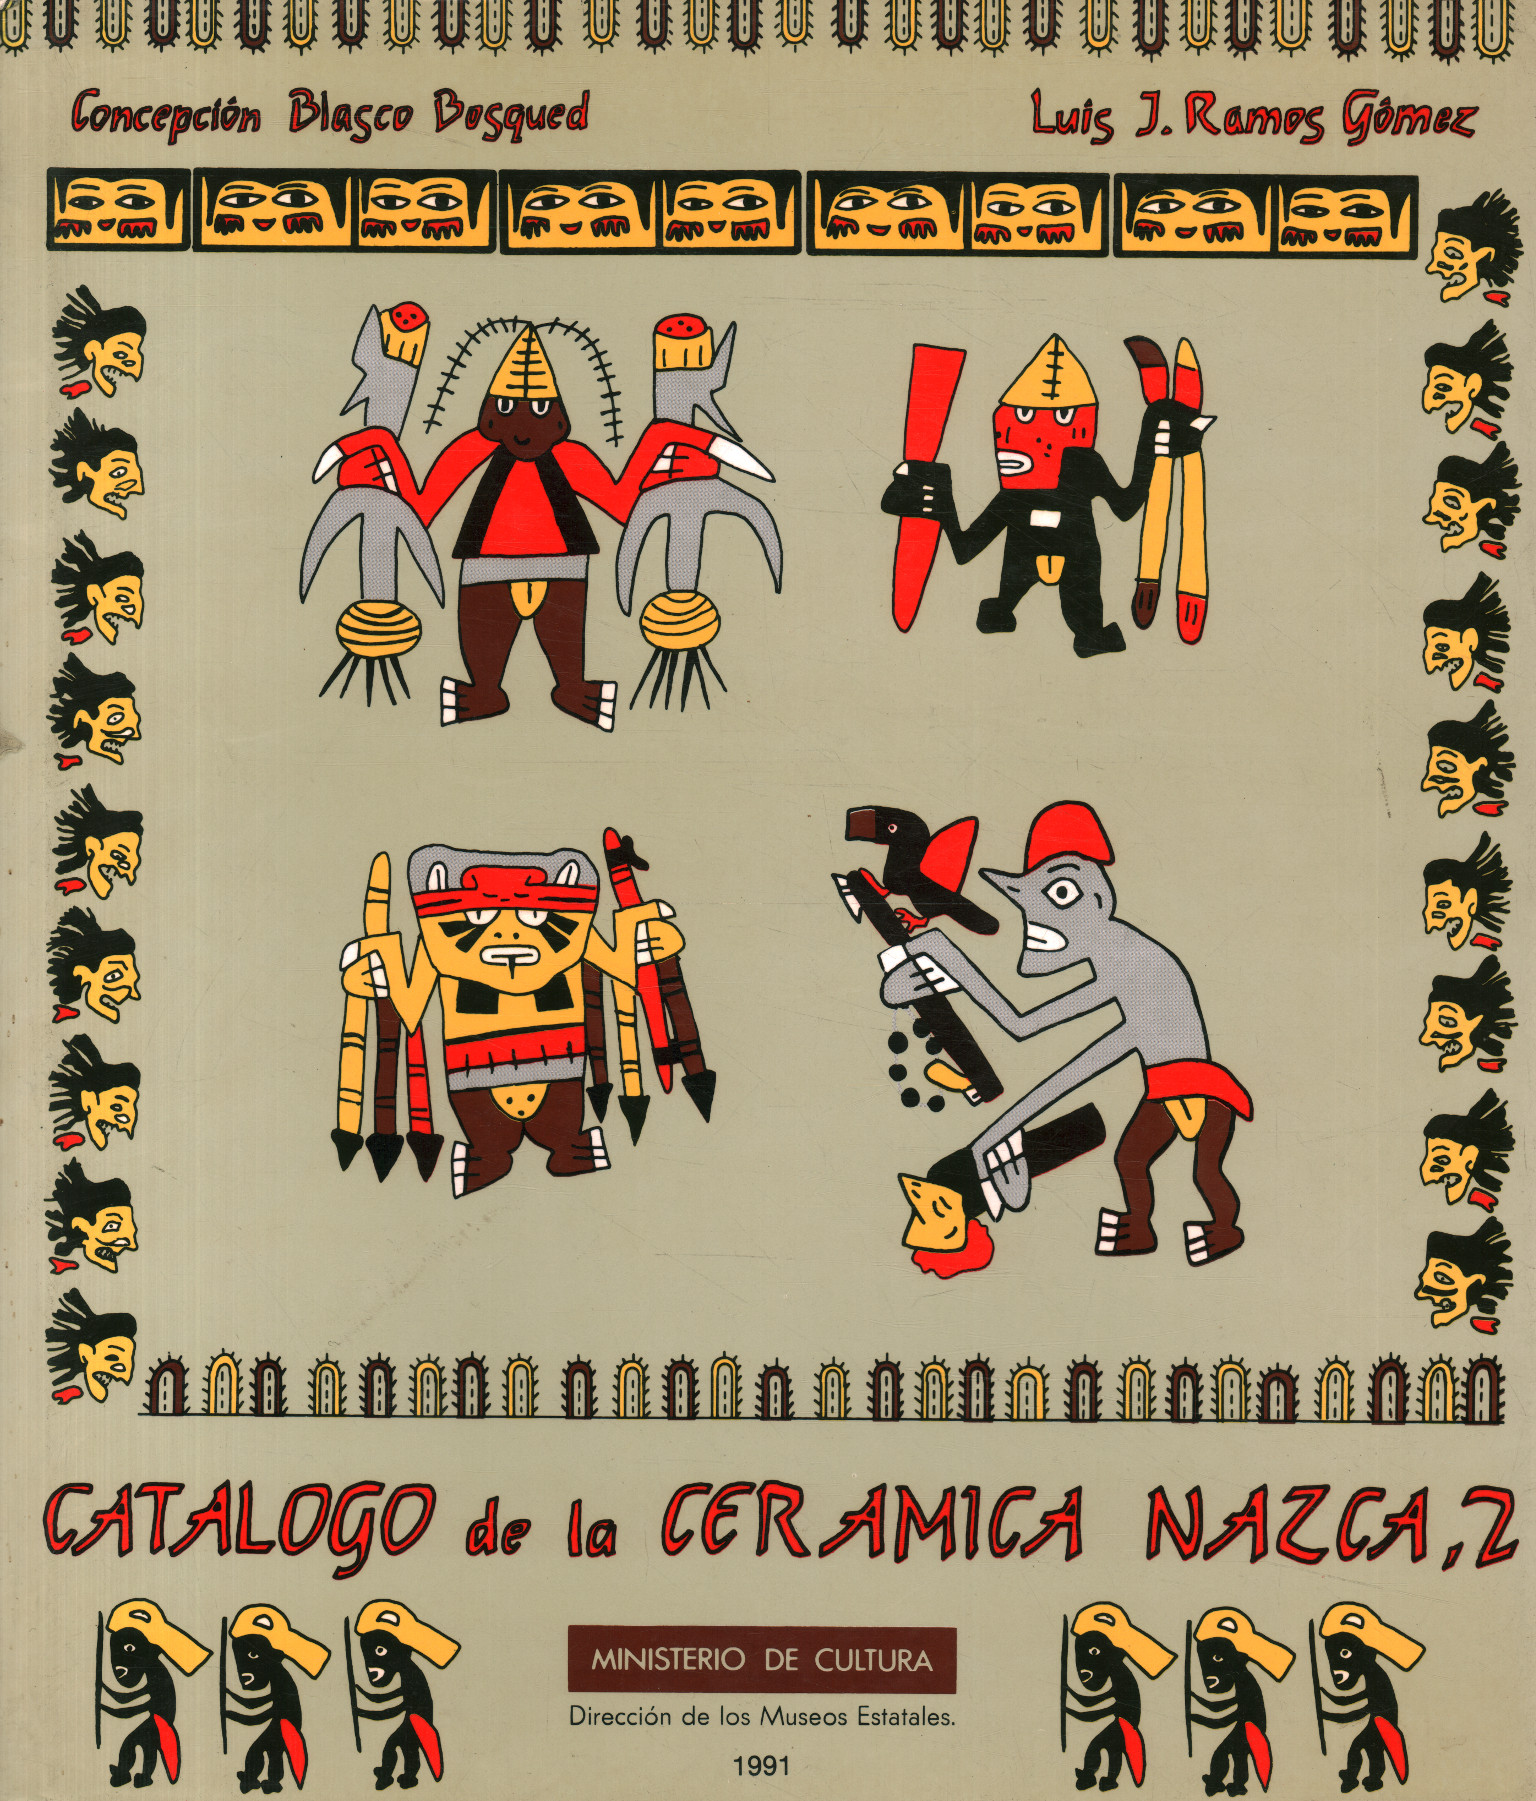 Catalogue des céramiques de Nazca